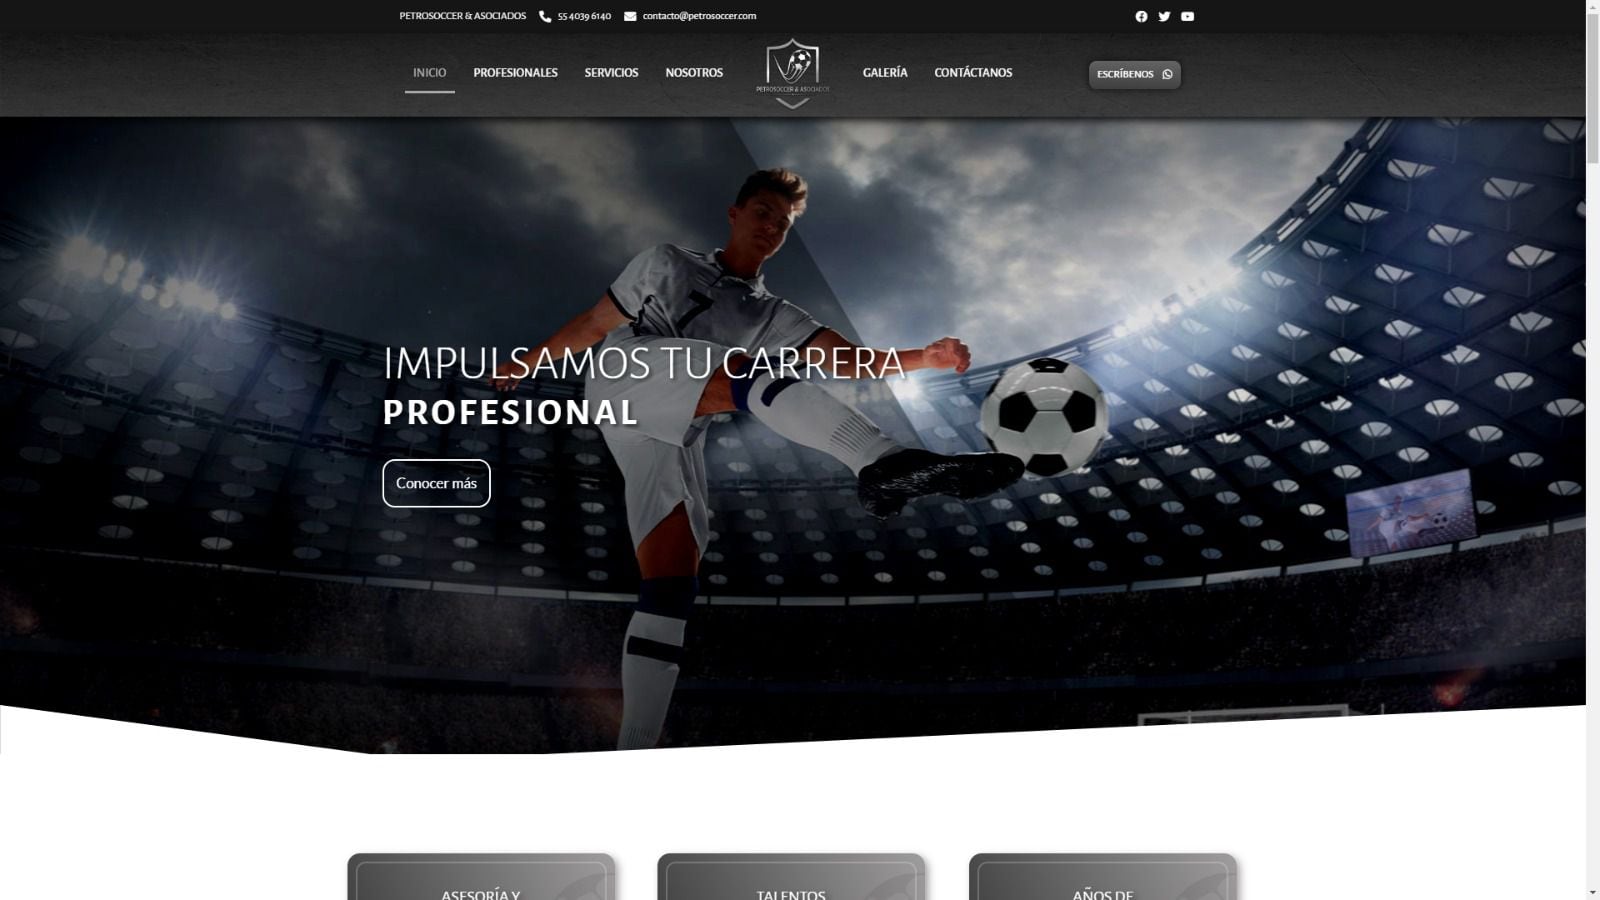 Pantallazo de la página web de Petro Soccer, la empresa que comprará el nombre del estadio Deportivo Cali. Foto: captura pantalla